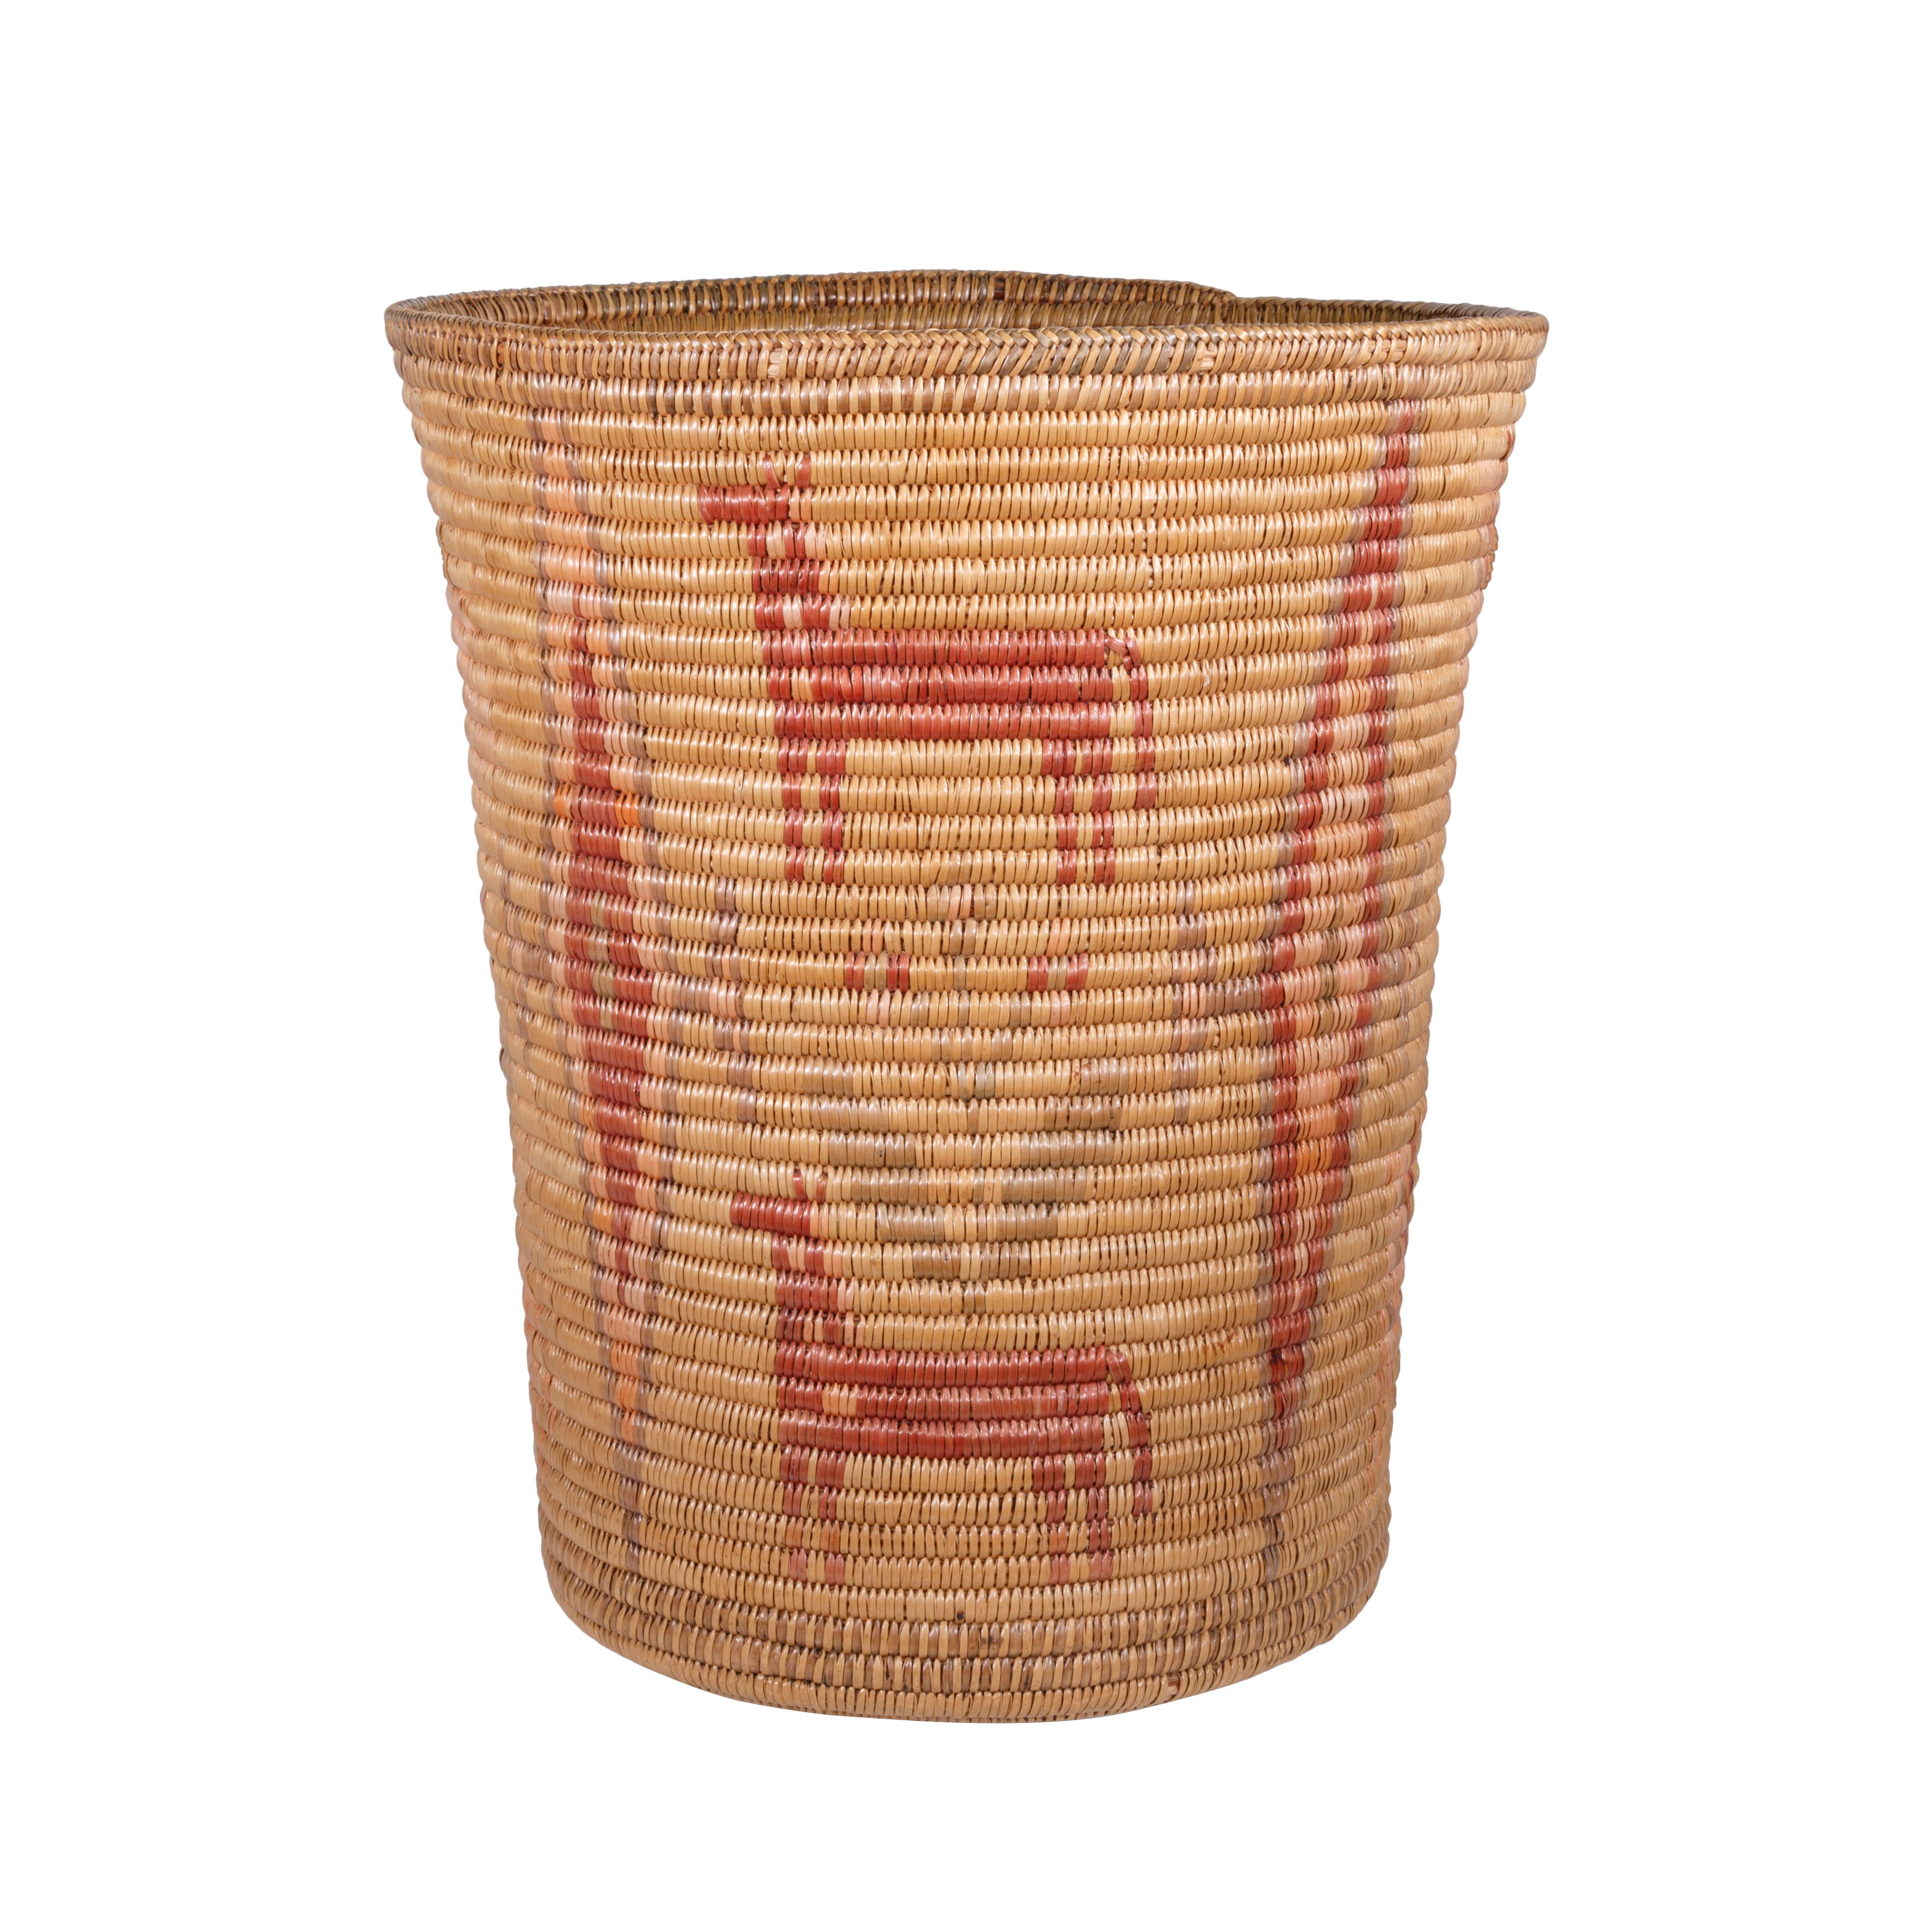 Apache Jicarilla Apache Basket In Good Condition For Sale In Coeur d'Alene, ID